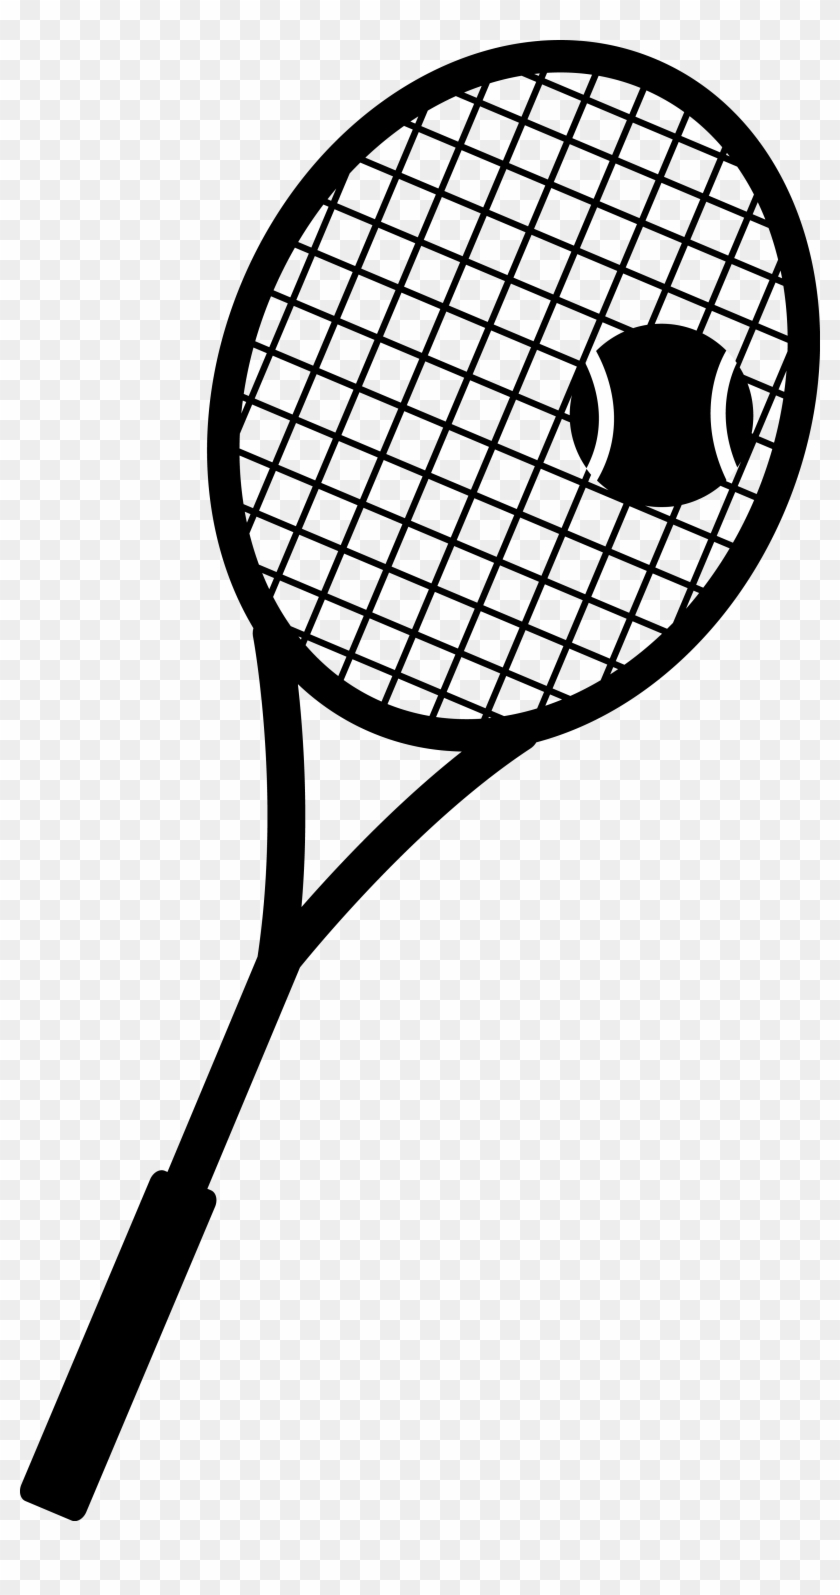 Sports Equipment Png Clipart - Tennis Racket Clip Art #402115